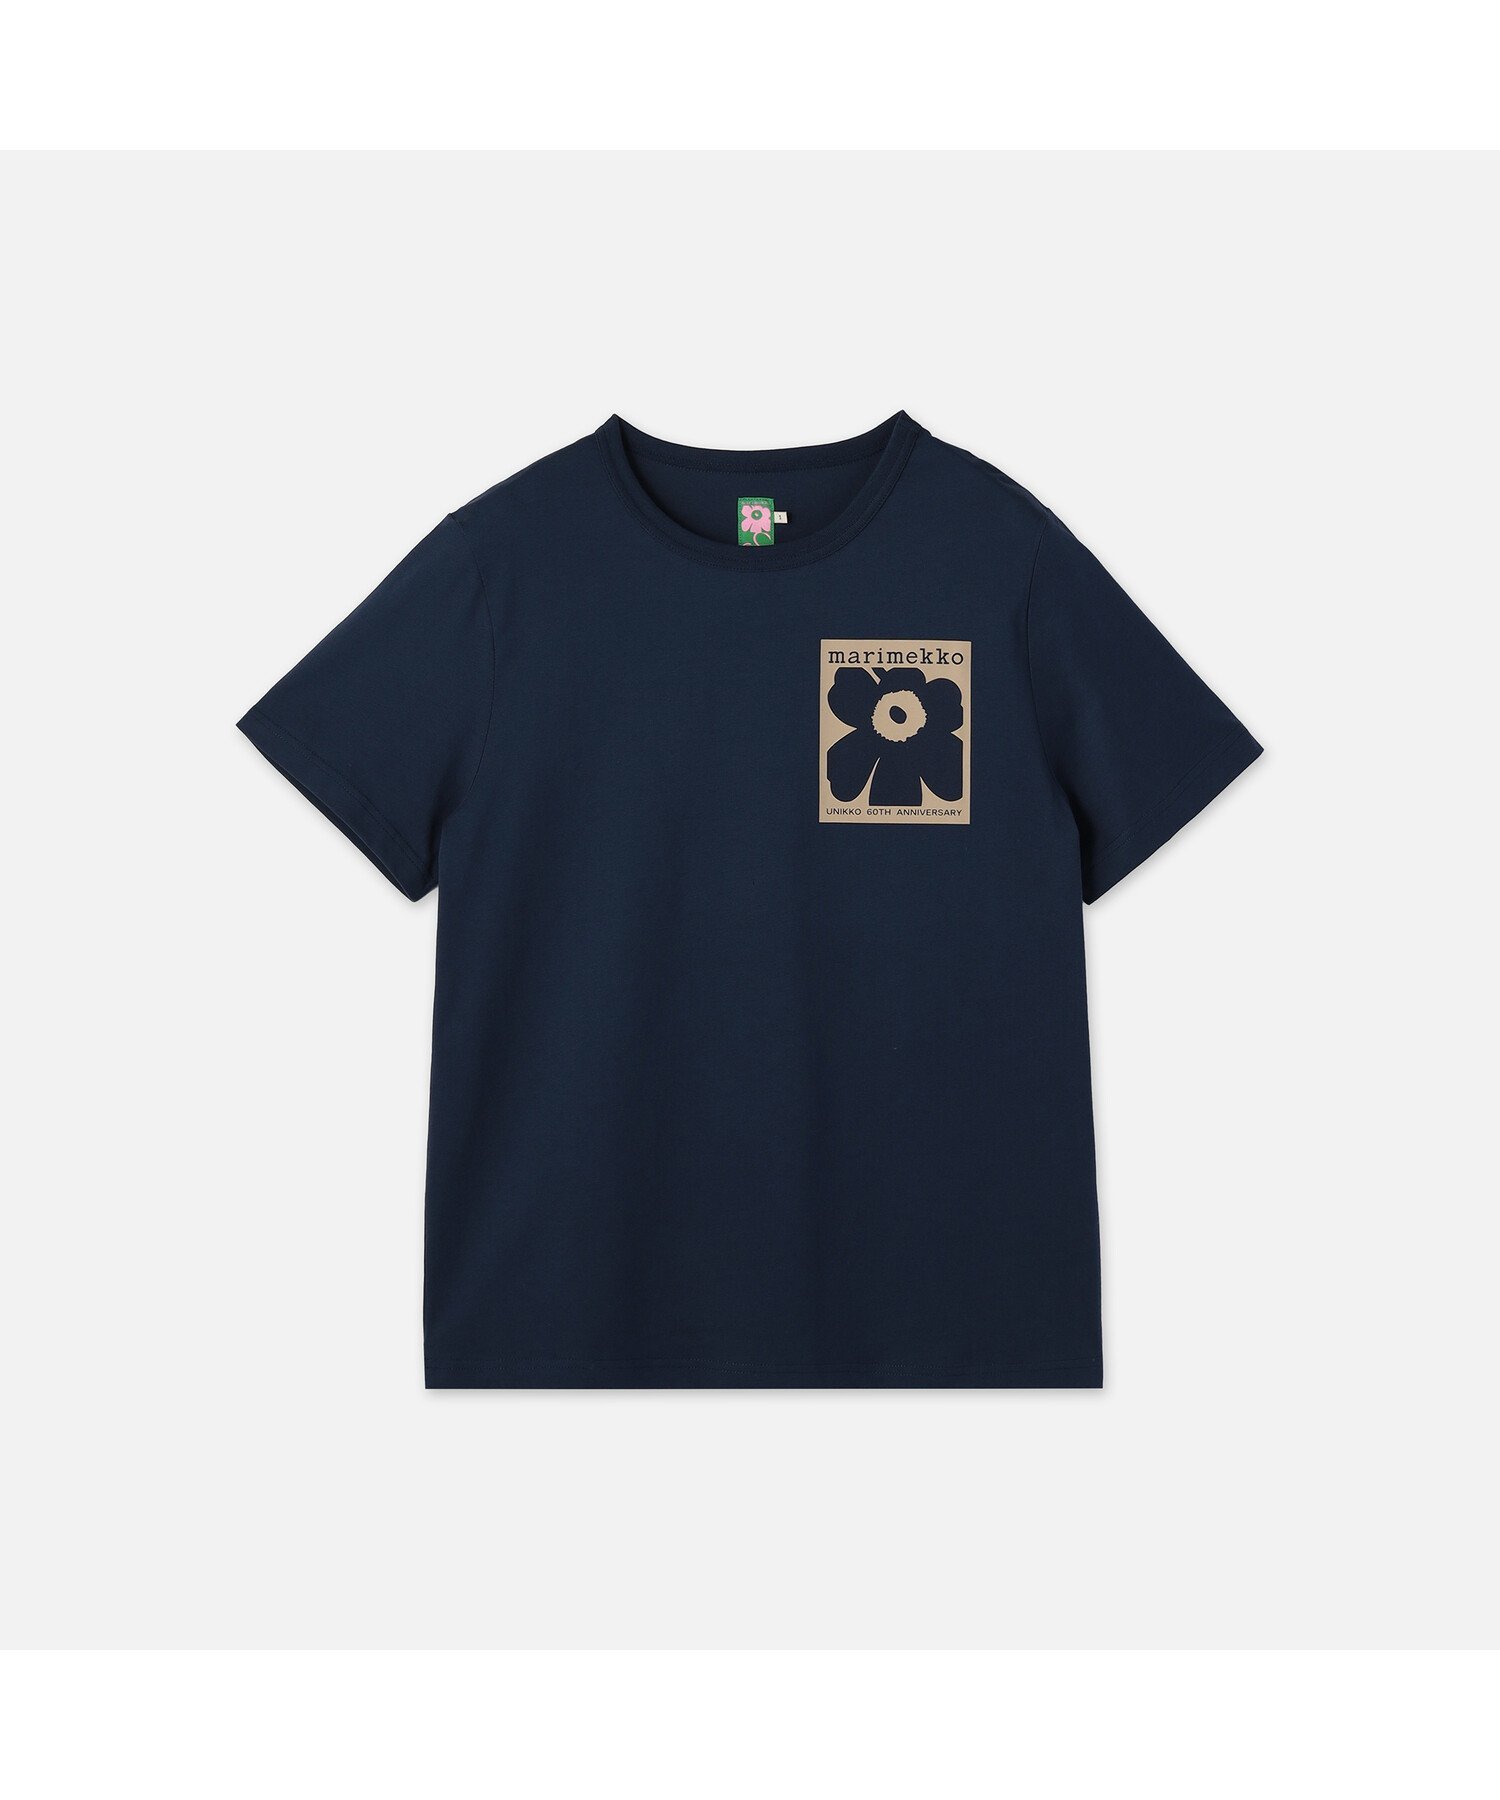 Marimekko Kioski Vihne Unikko Placement Tシャツ マリメッコ トップス シャツ・ブラウス【送料無料】